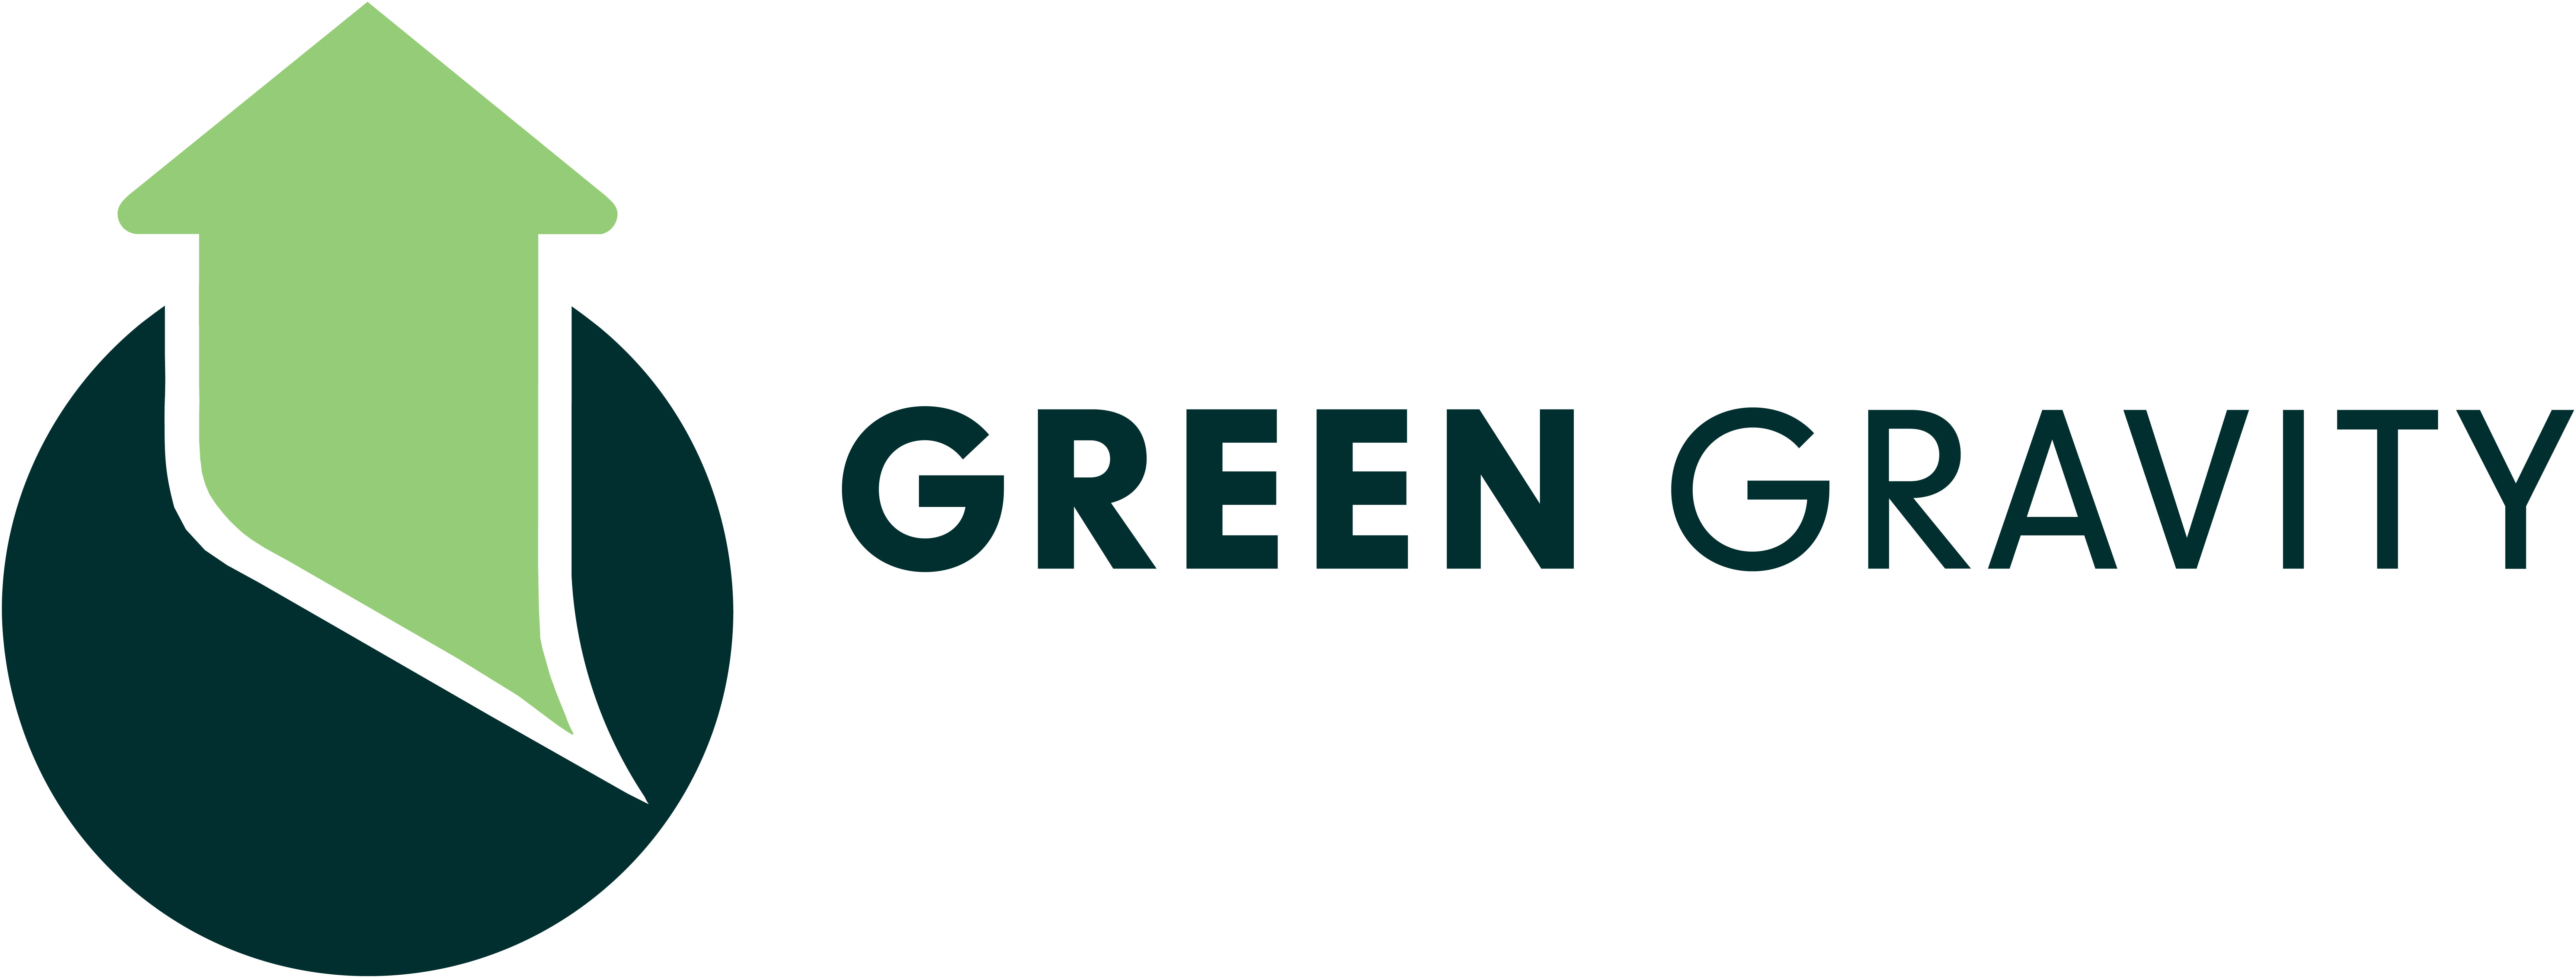 greengravity